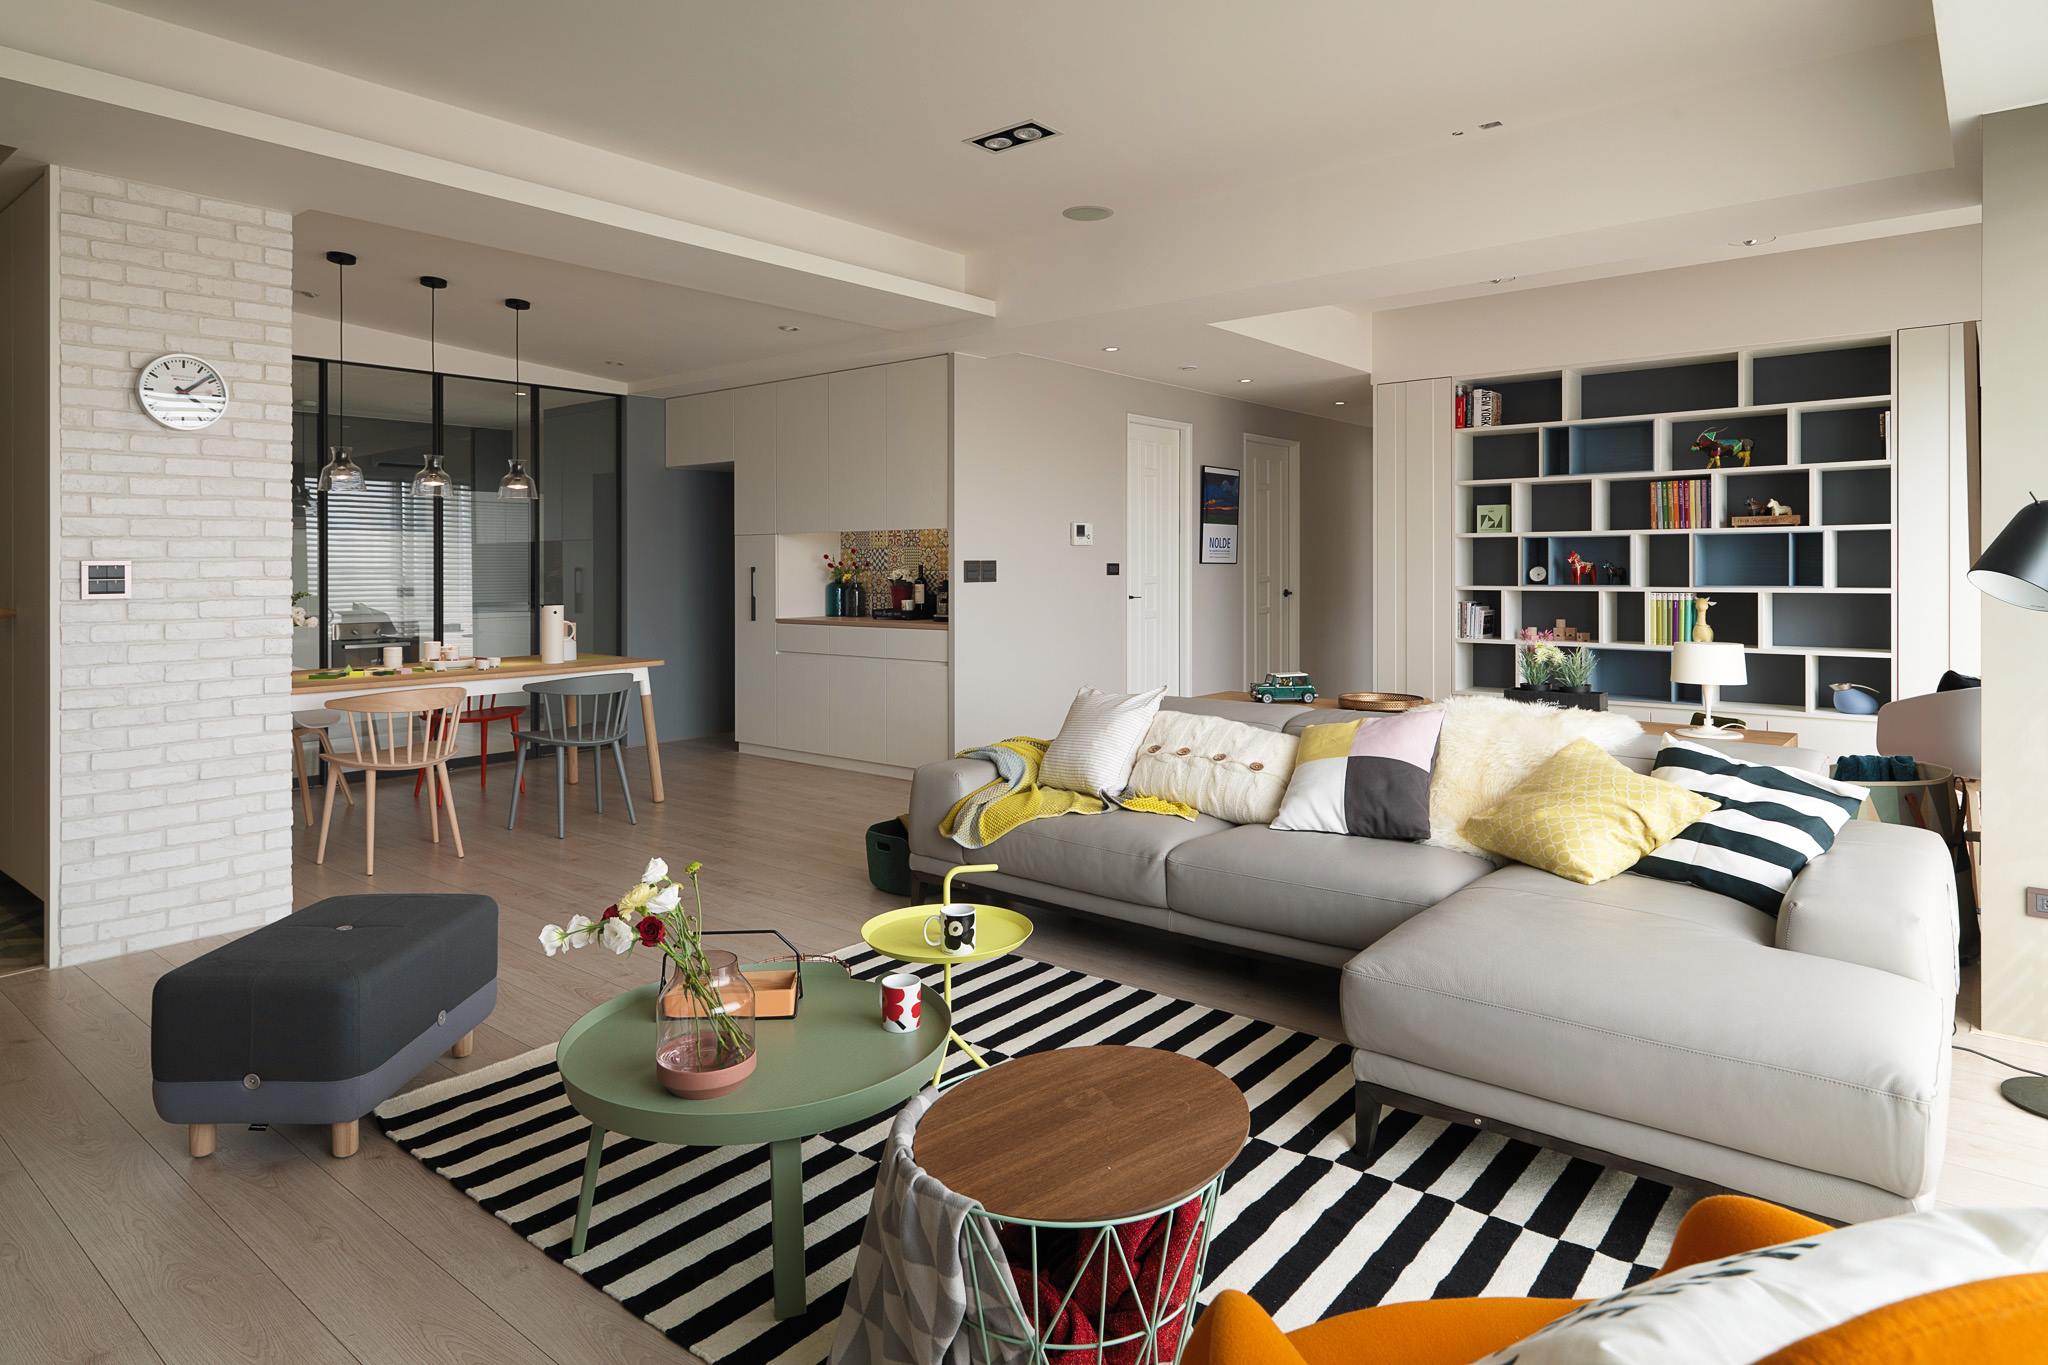 Nordic Living Room Designs Ideas by Nordico - RooHome ...